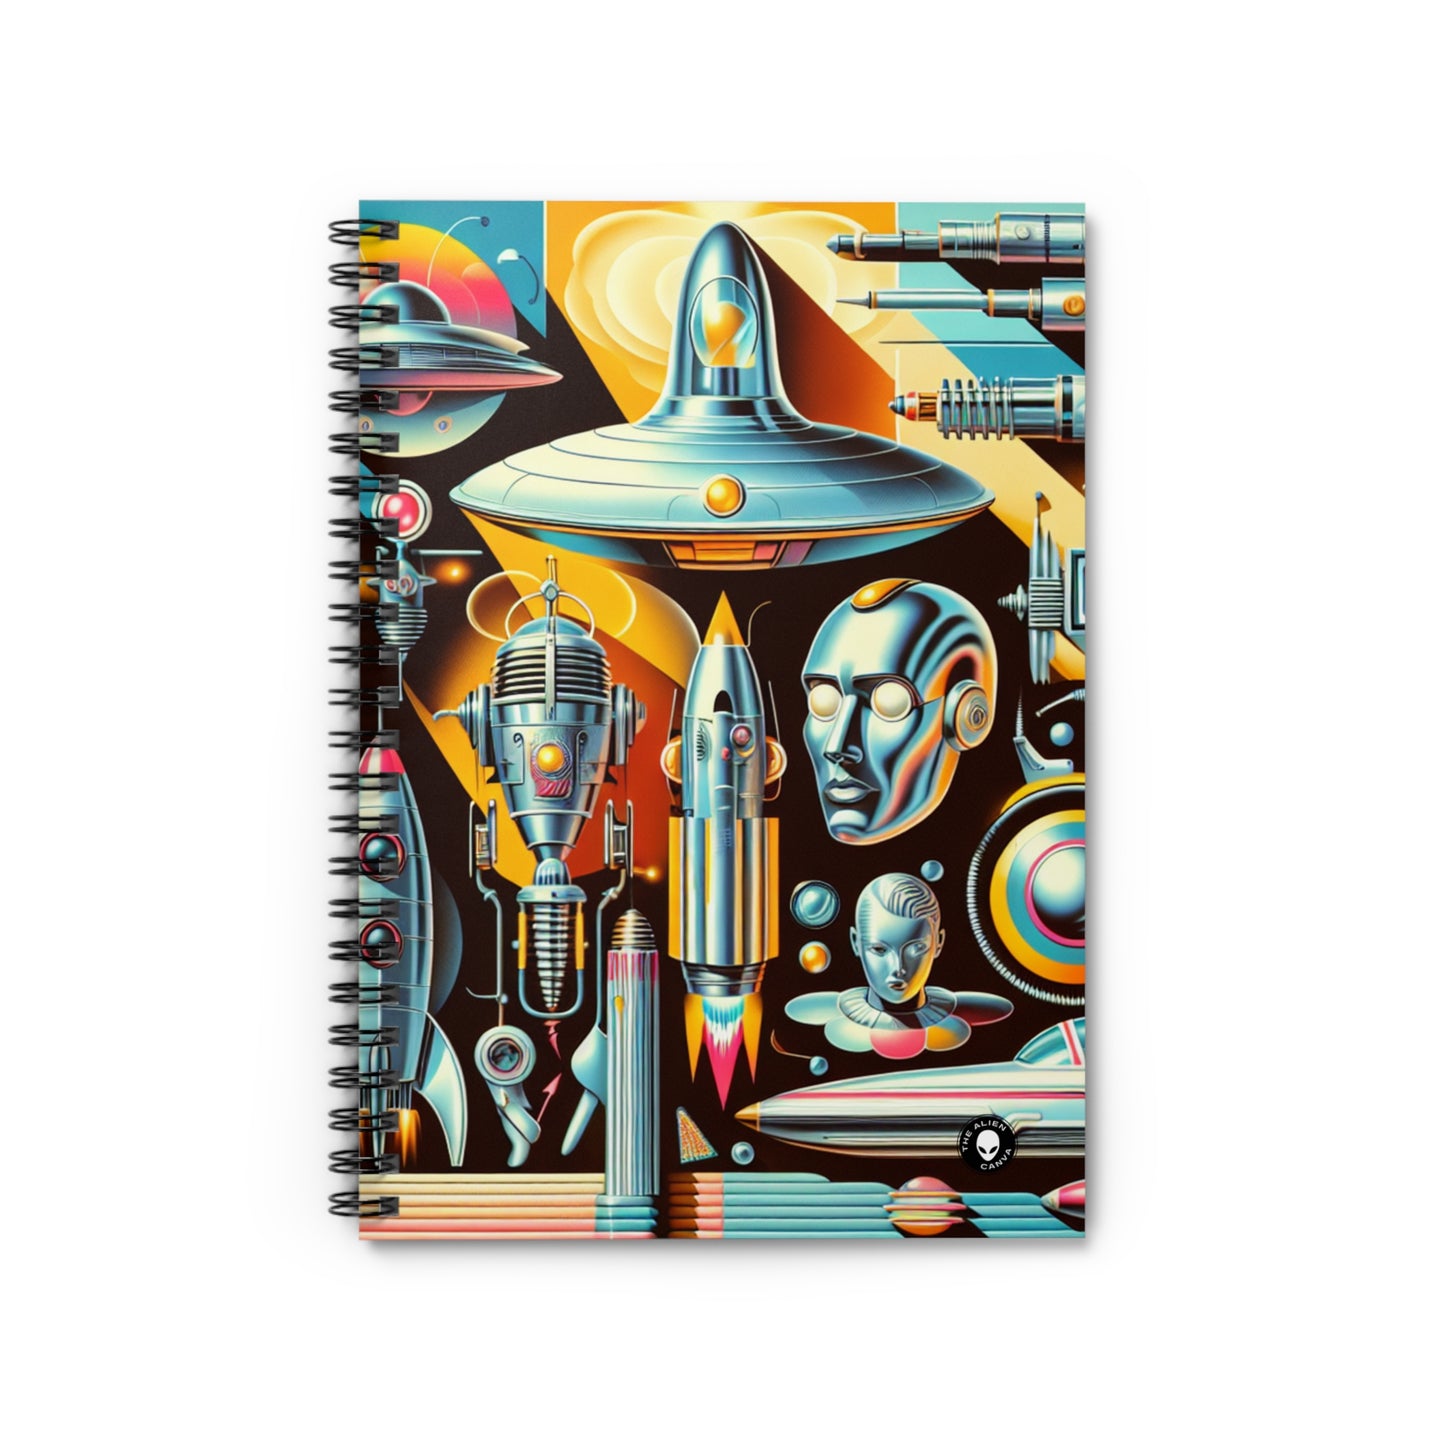 "Neon Deco : Une utopie rétro-futuriste" - The Alien Spiral Notebook (Ruled Line) Rétro-futurisme